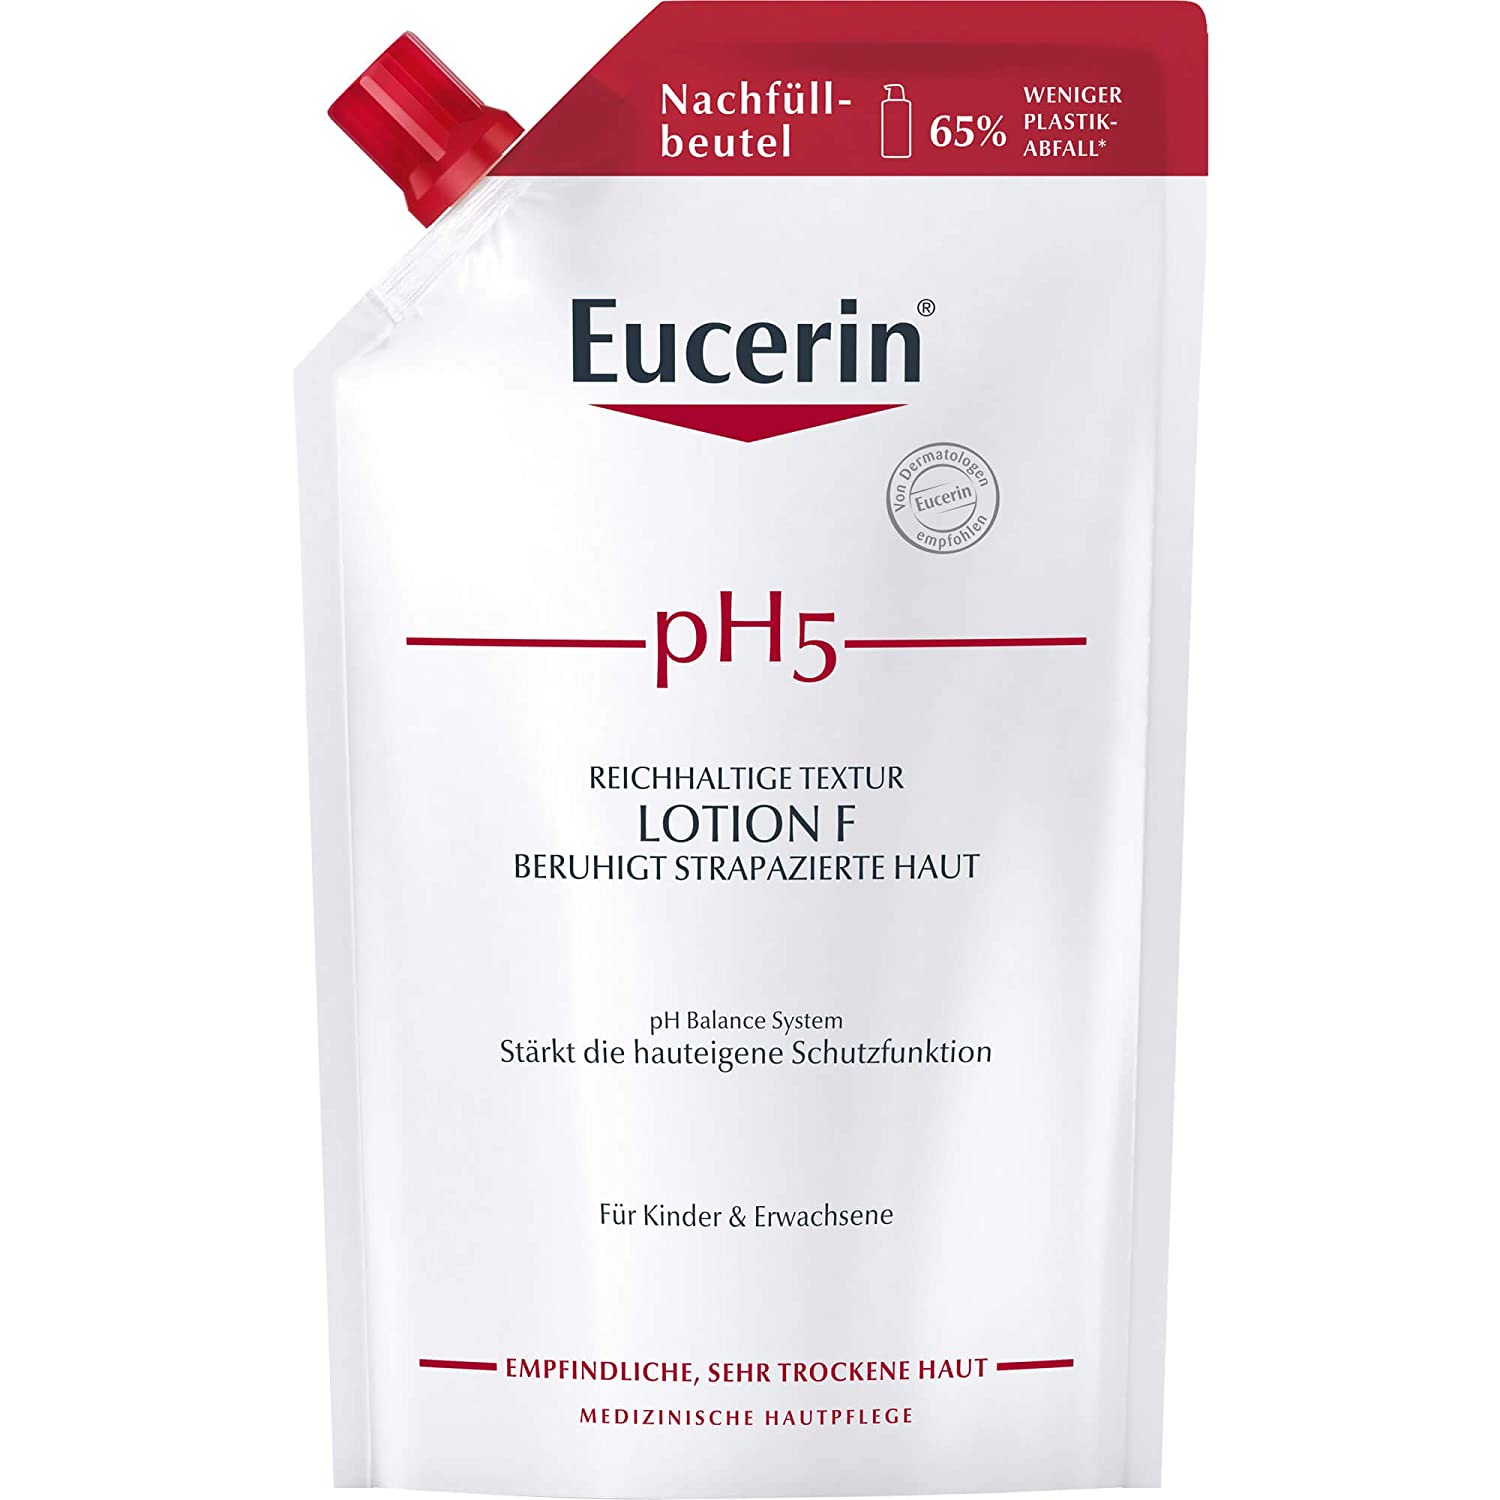 Eucerin pH5 Reichhaltige Textur Lotion F Nachfüllbeutel, 400 ml Lotion